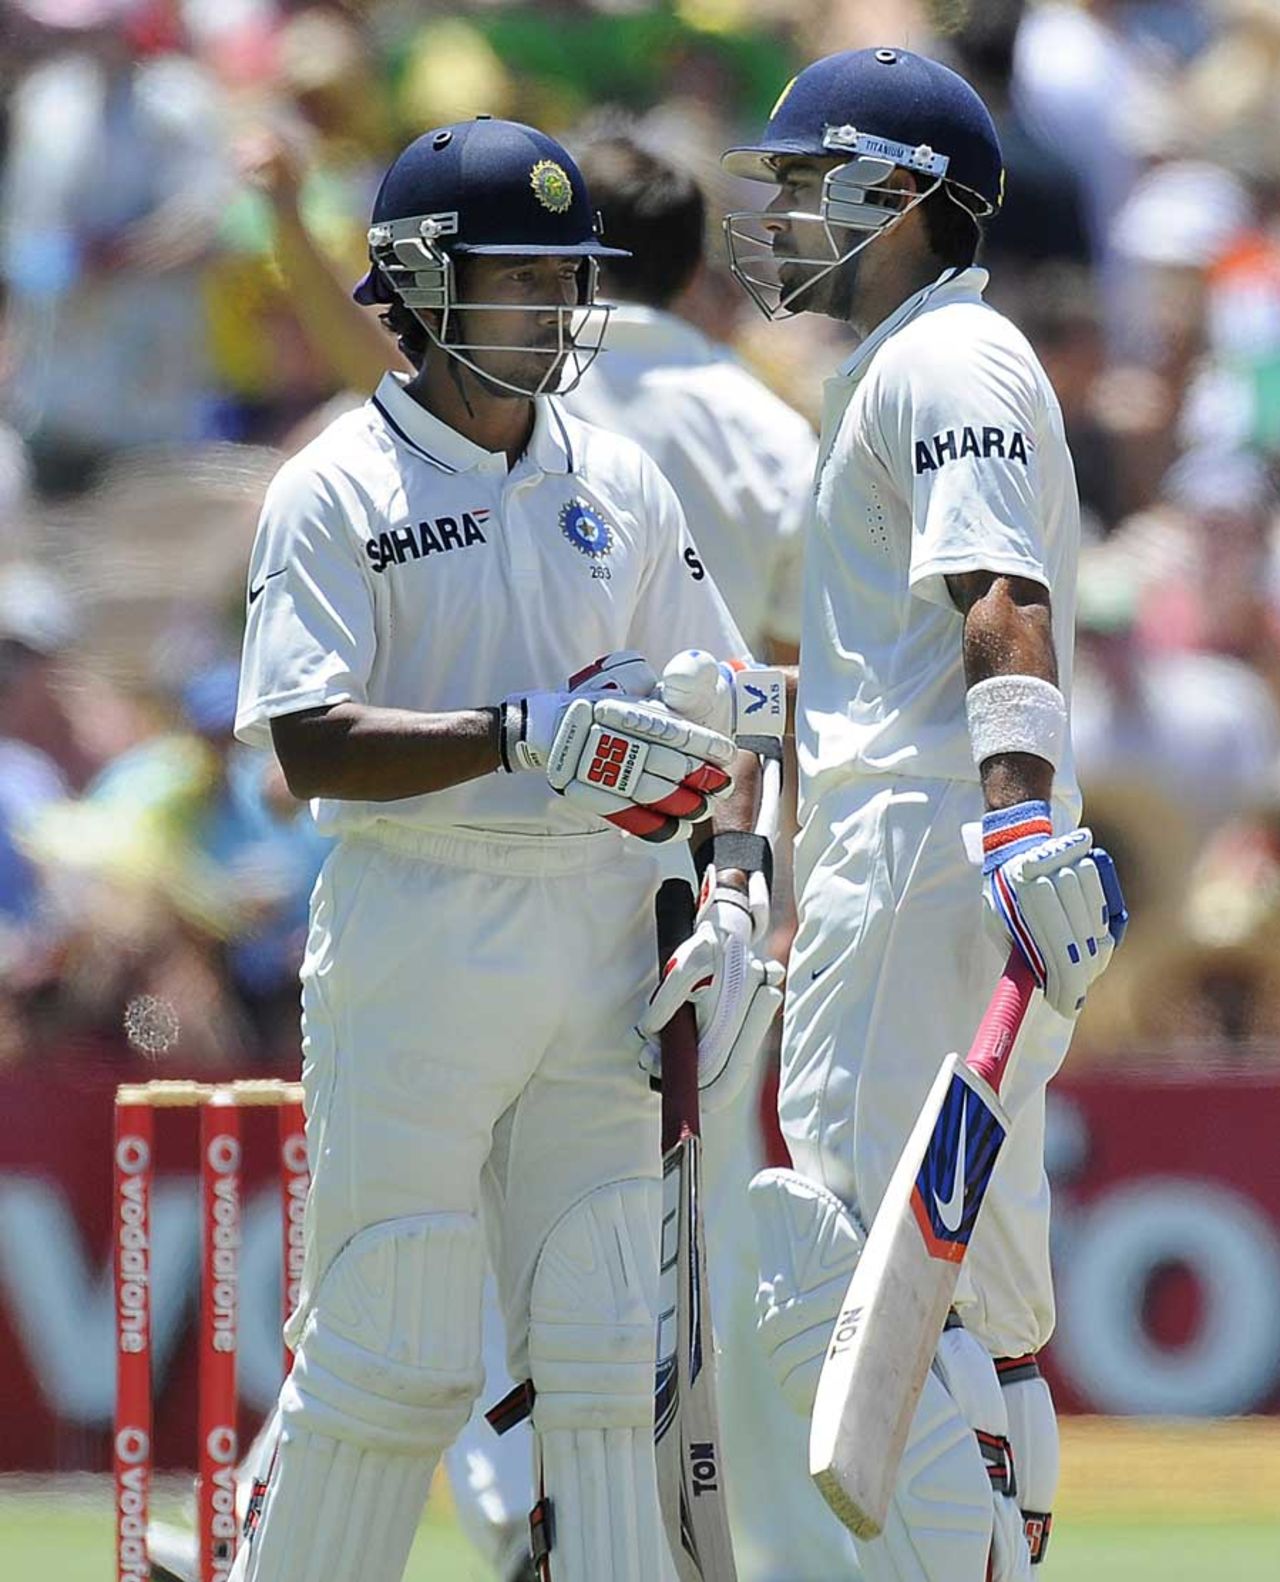 Wriddhiman Saha and Virat Kohli stablilised the Indian innings, Australia v India, 4th Test, Adelaide, 3rd day, January 26, 2012